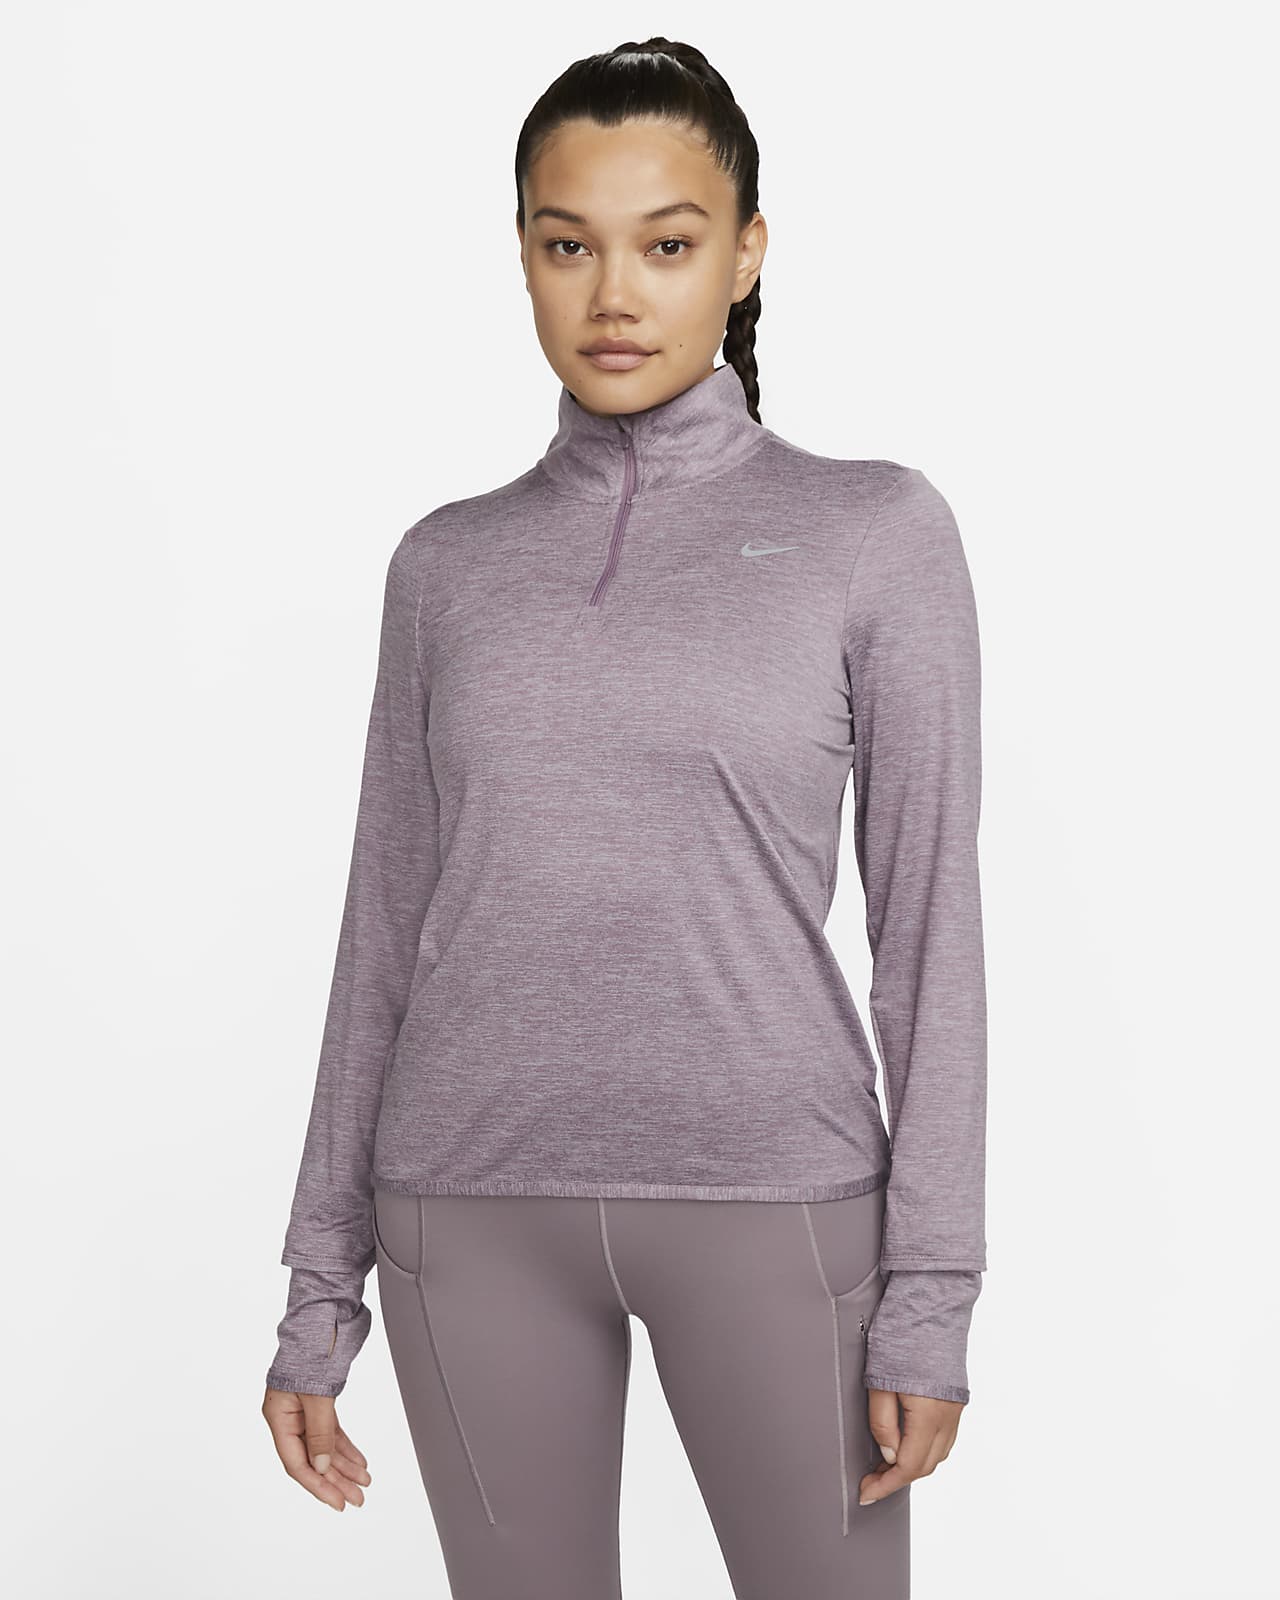 Nike Women's Run Swift Element 1/2 Zip Long Sleeve Top